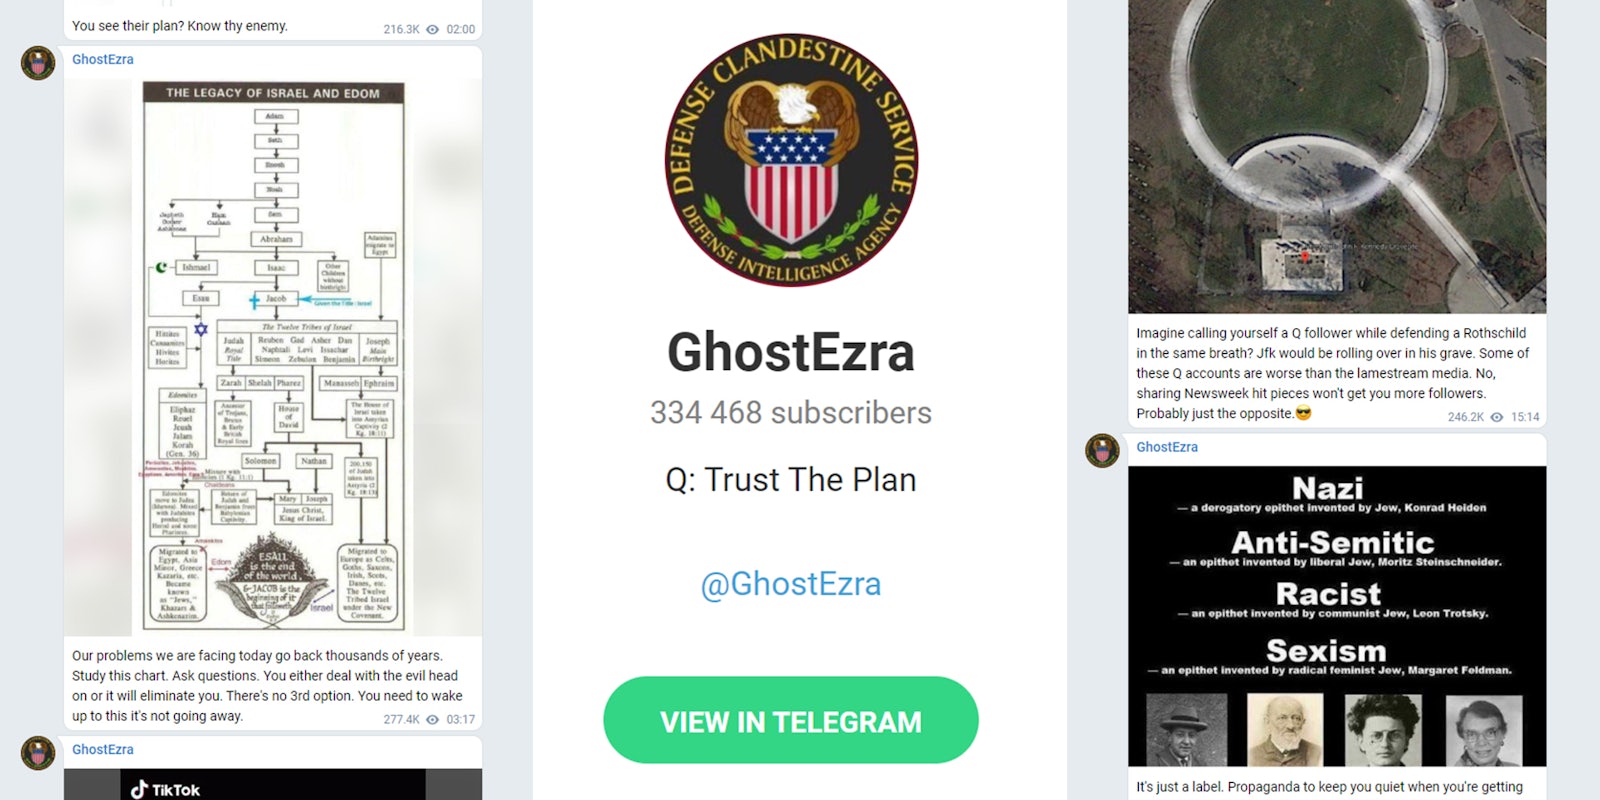 GhostEzra telegram account with antisemitic conspiracy posts